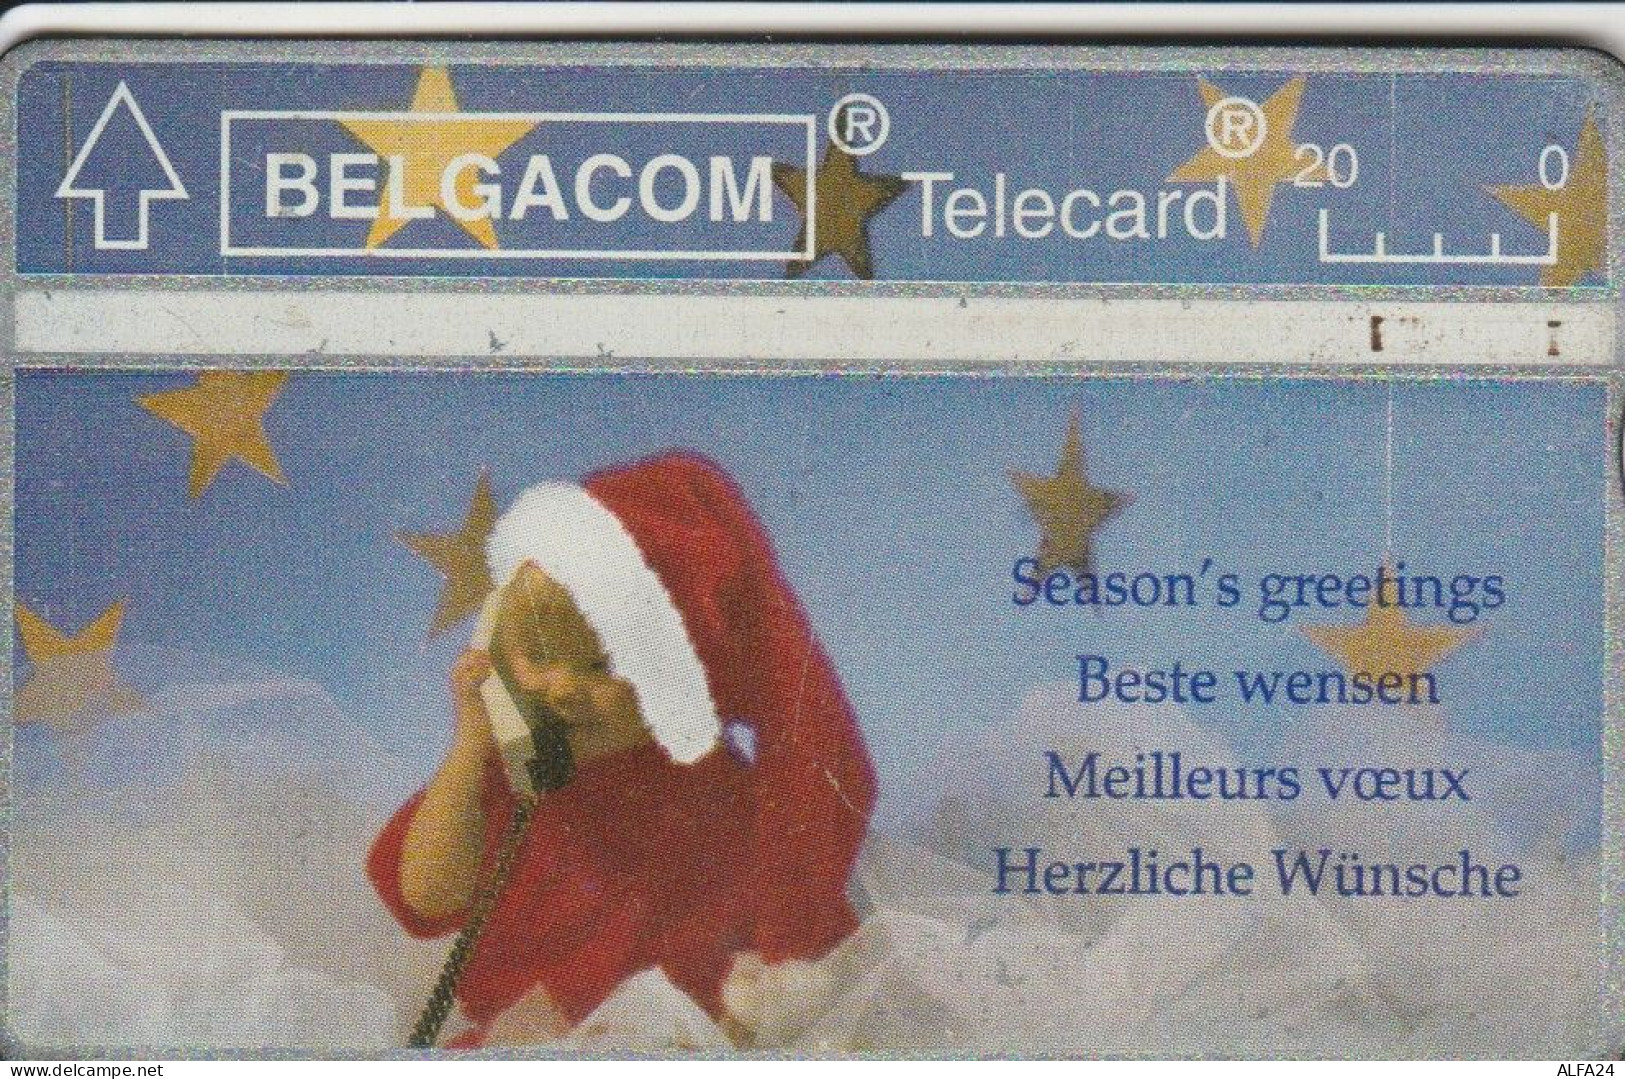 PHONE CARD BELGIO NATALE (E95.17.1 - Senza Chip